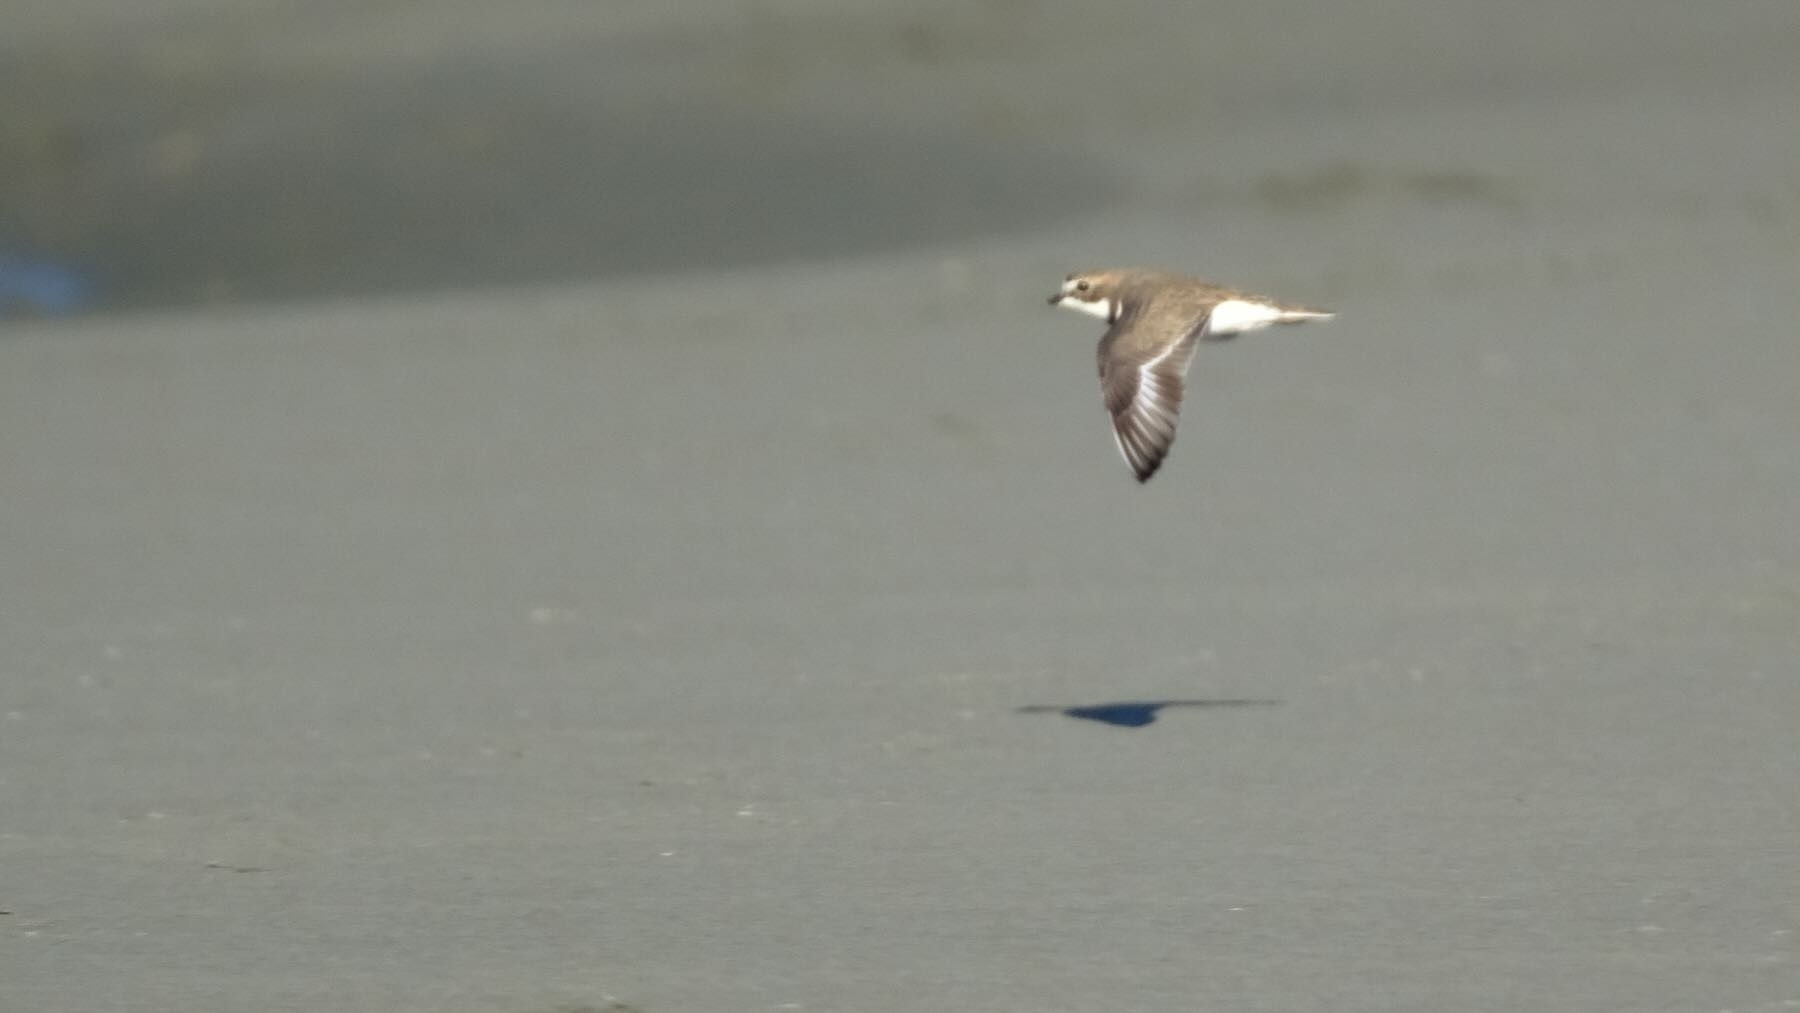 Banded dotterel flying just above the sand.